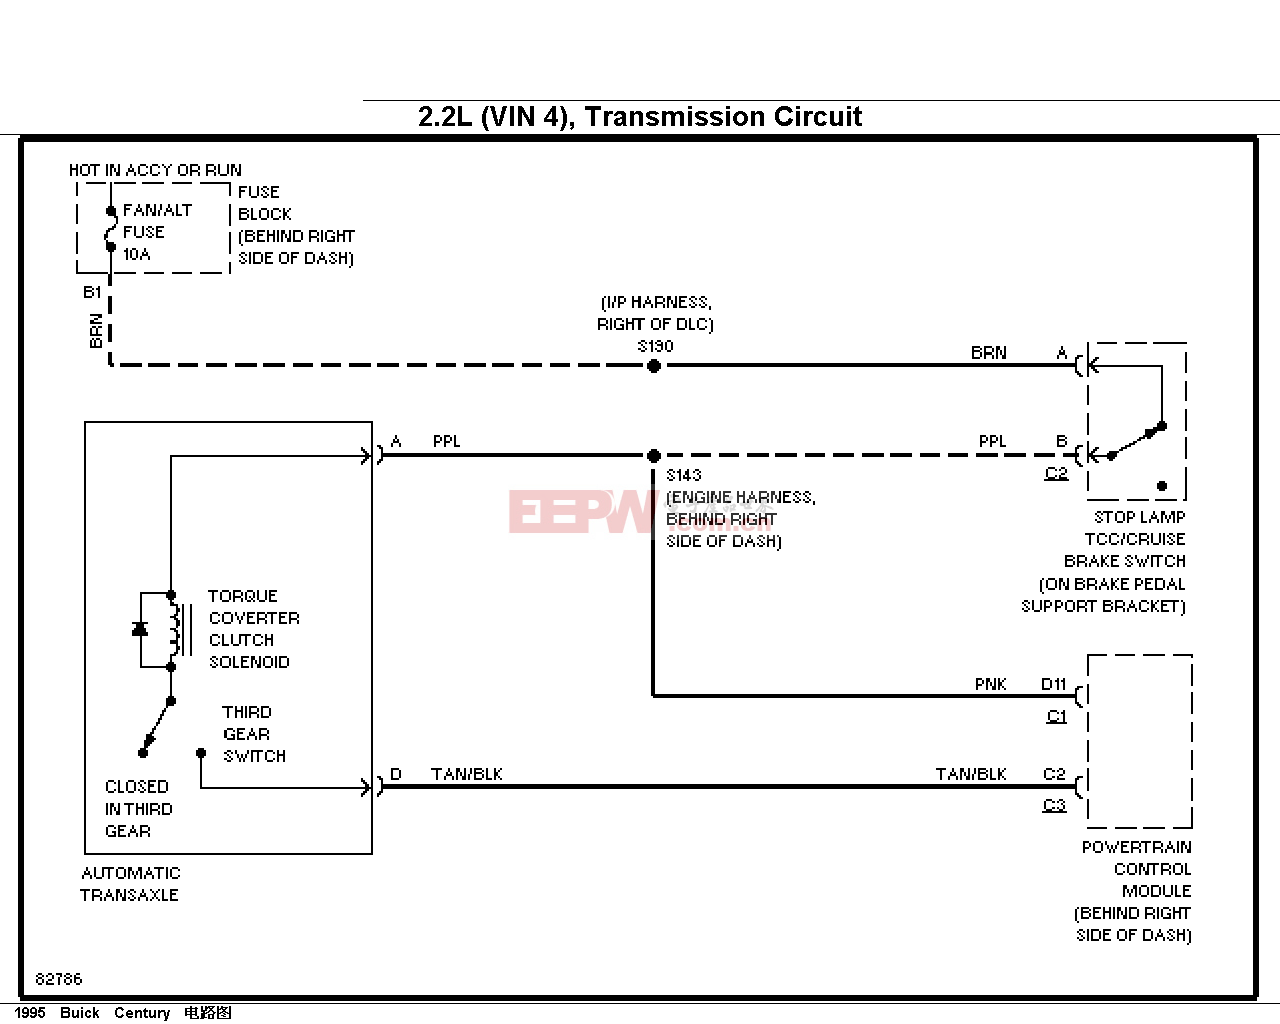 BUICK 95 century變速箱電路圖（2.2l,vin4)